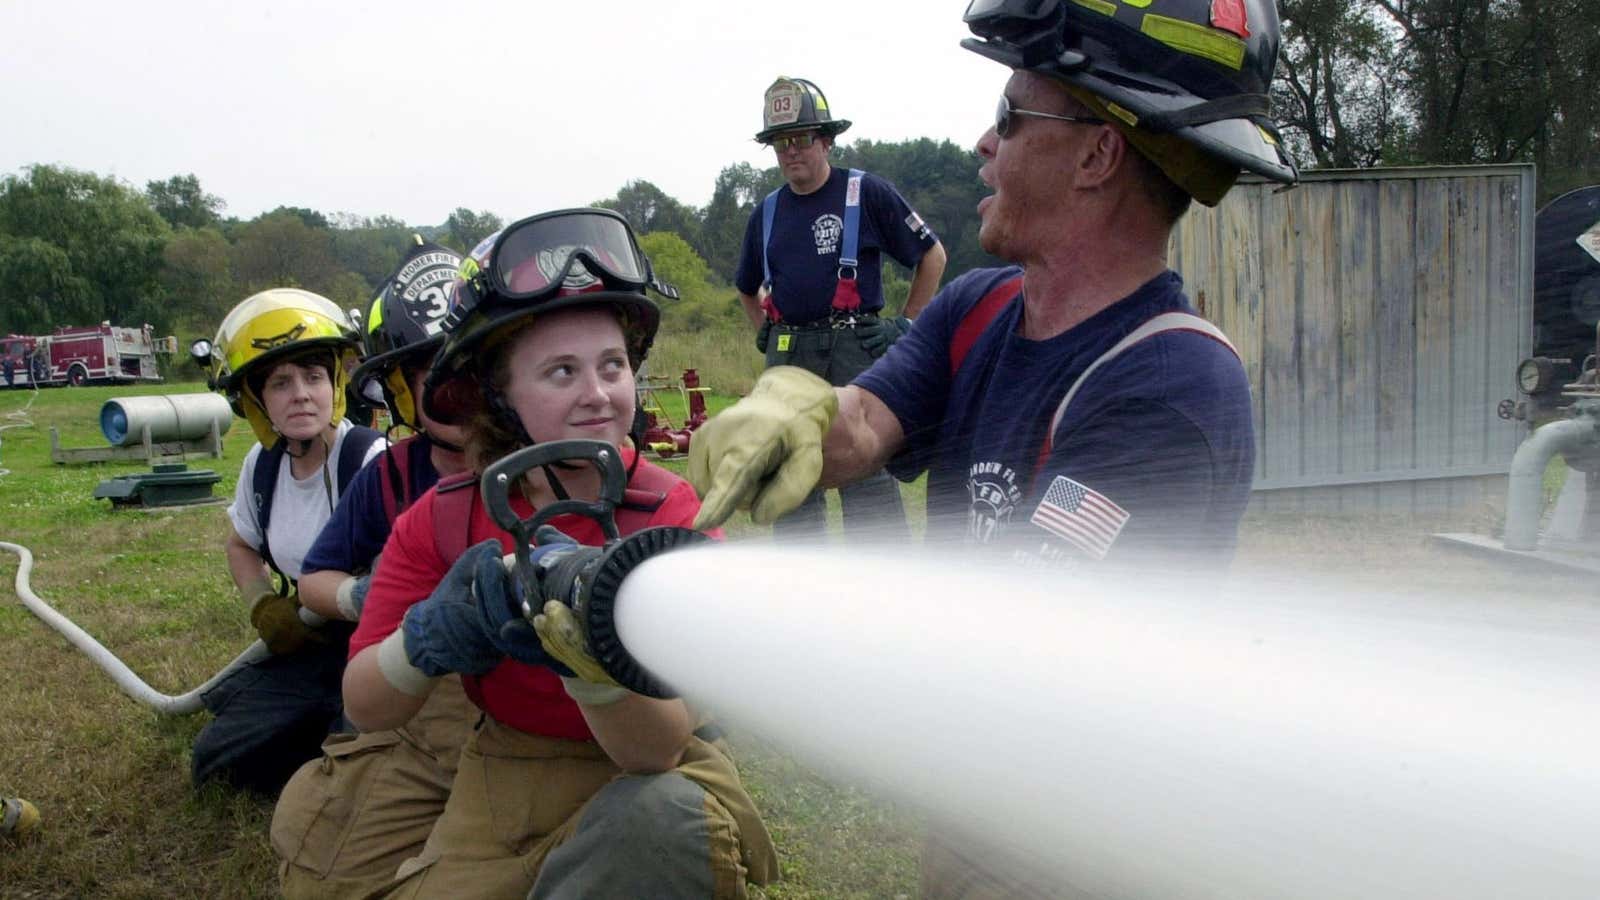 Not firemen or firewoman, just firefighters.